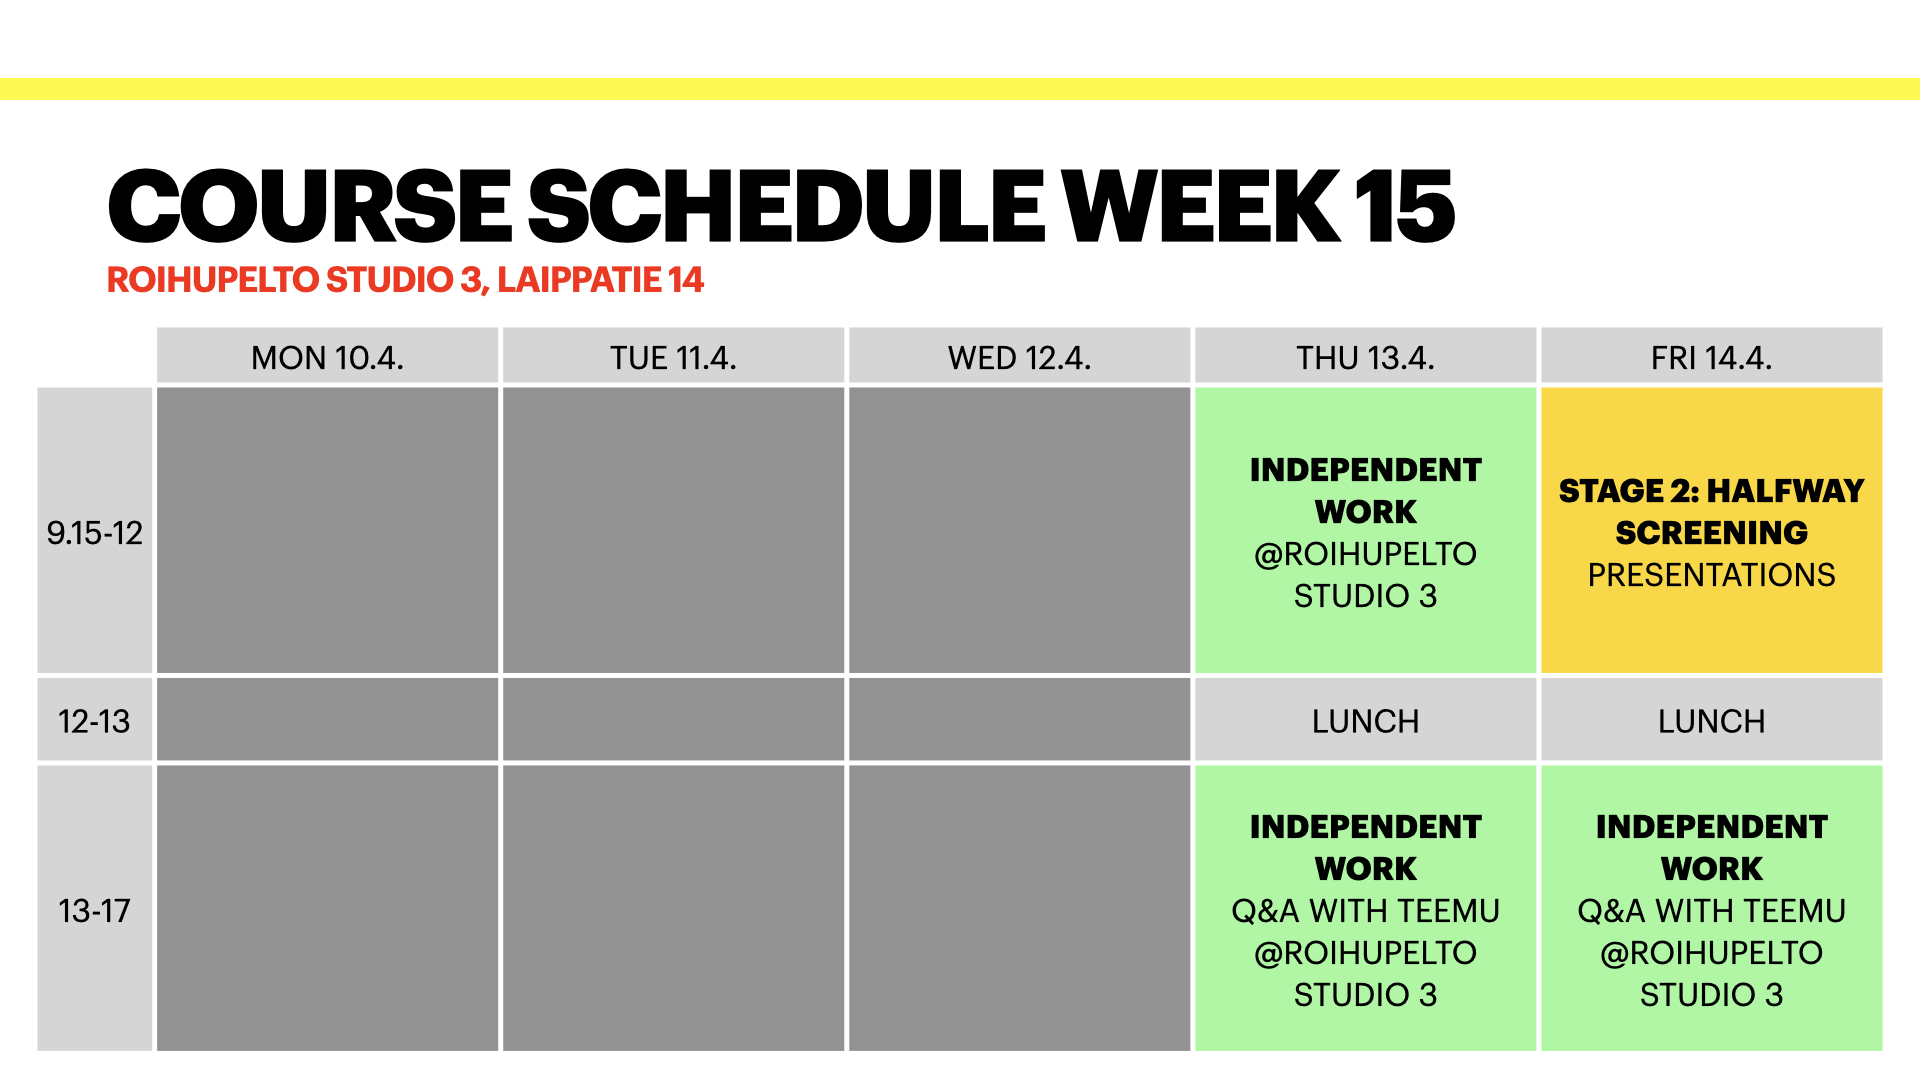 Course schedule week 15